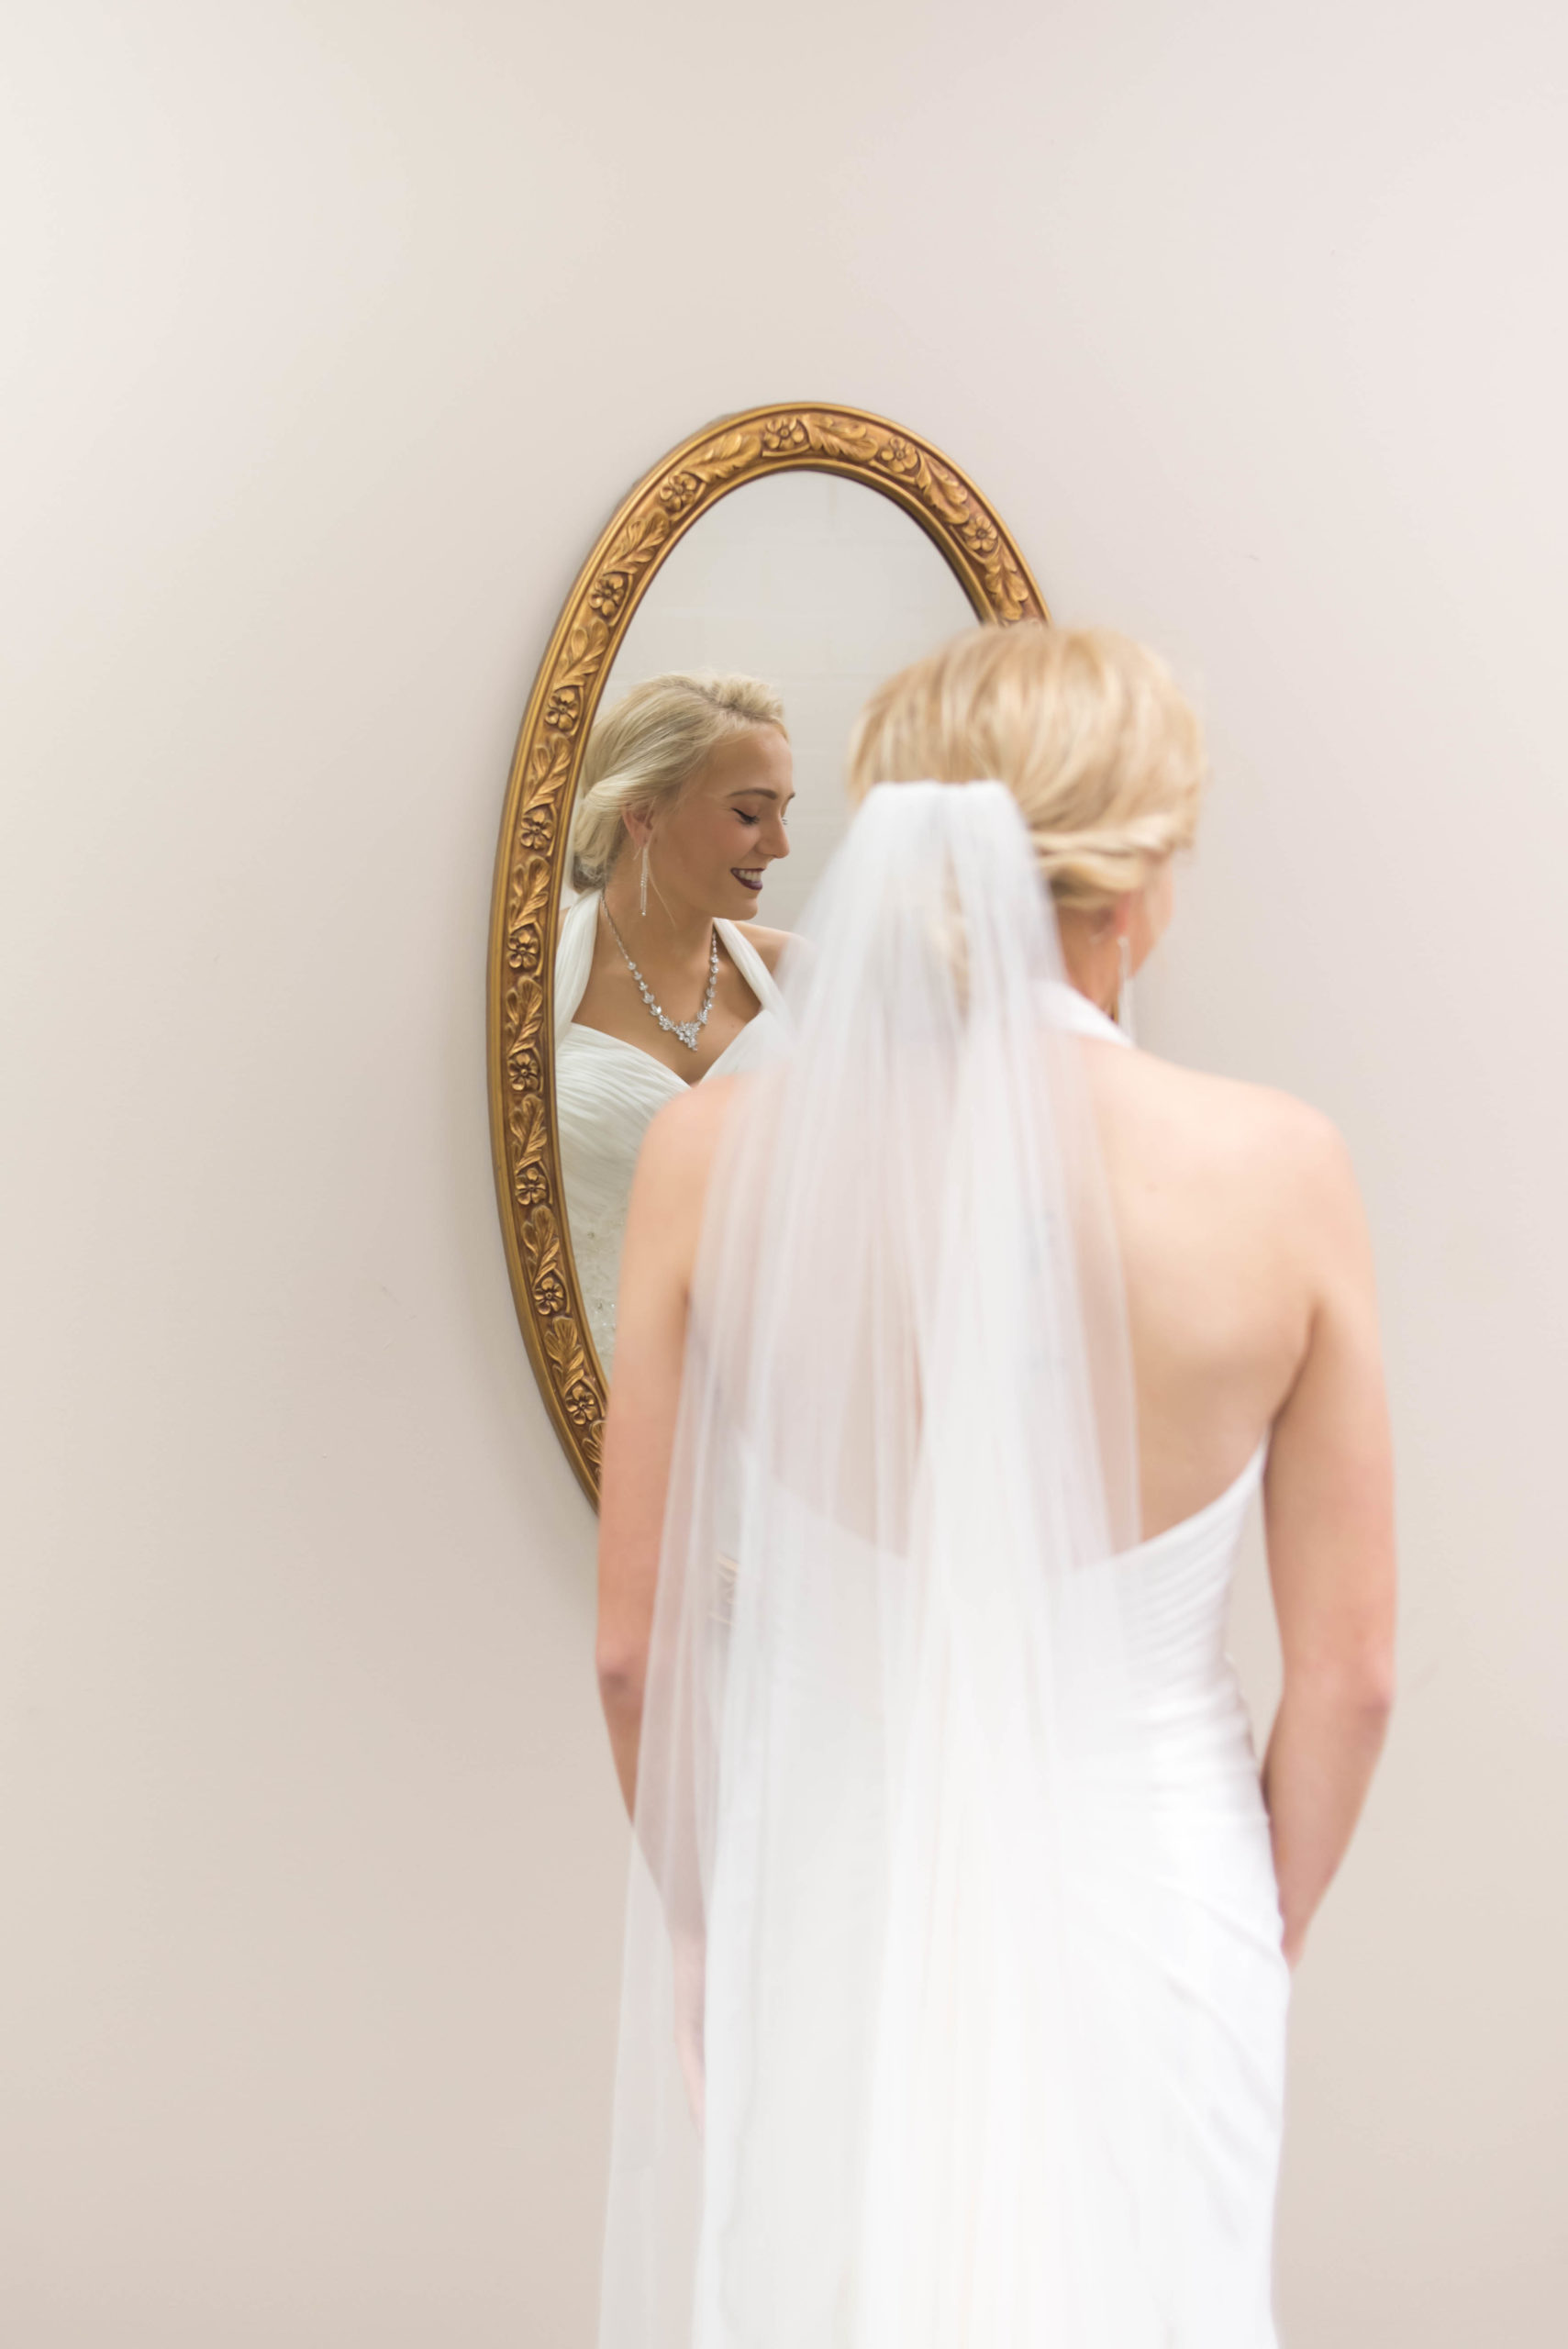 Bride getting ready for her wedding. Miranda Burchfield Photography, LLC.